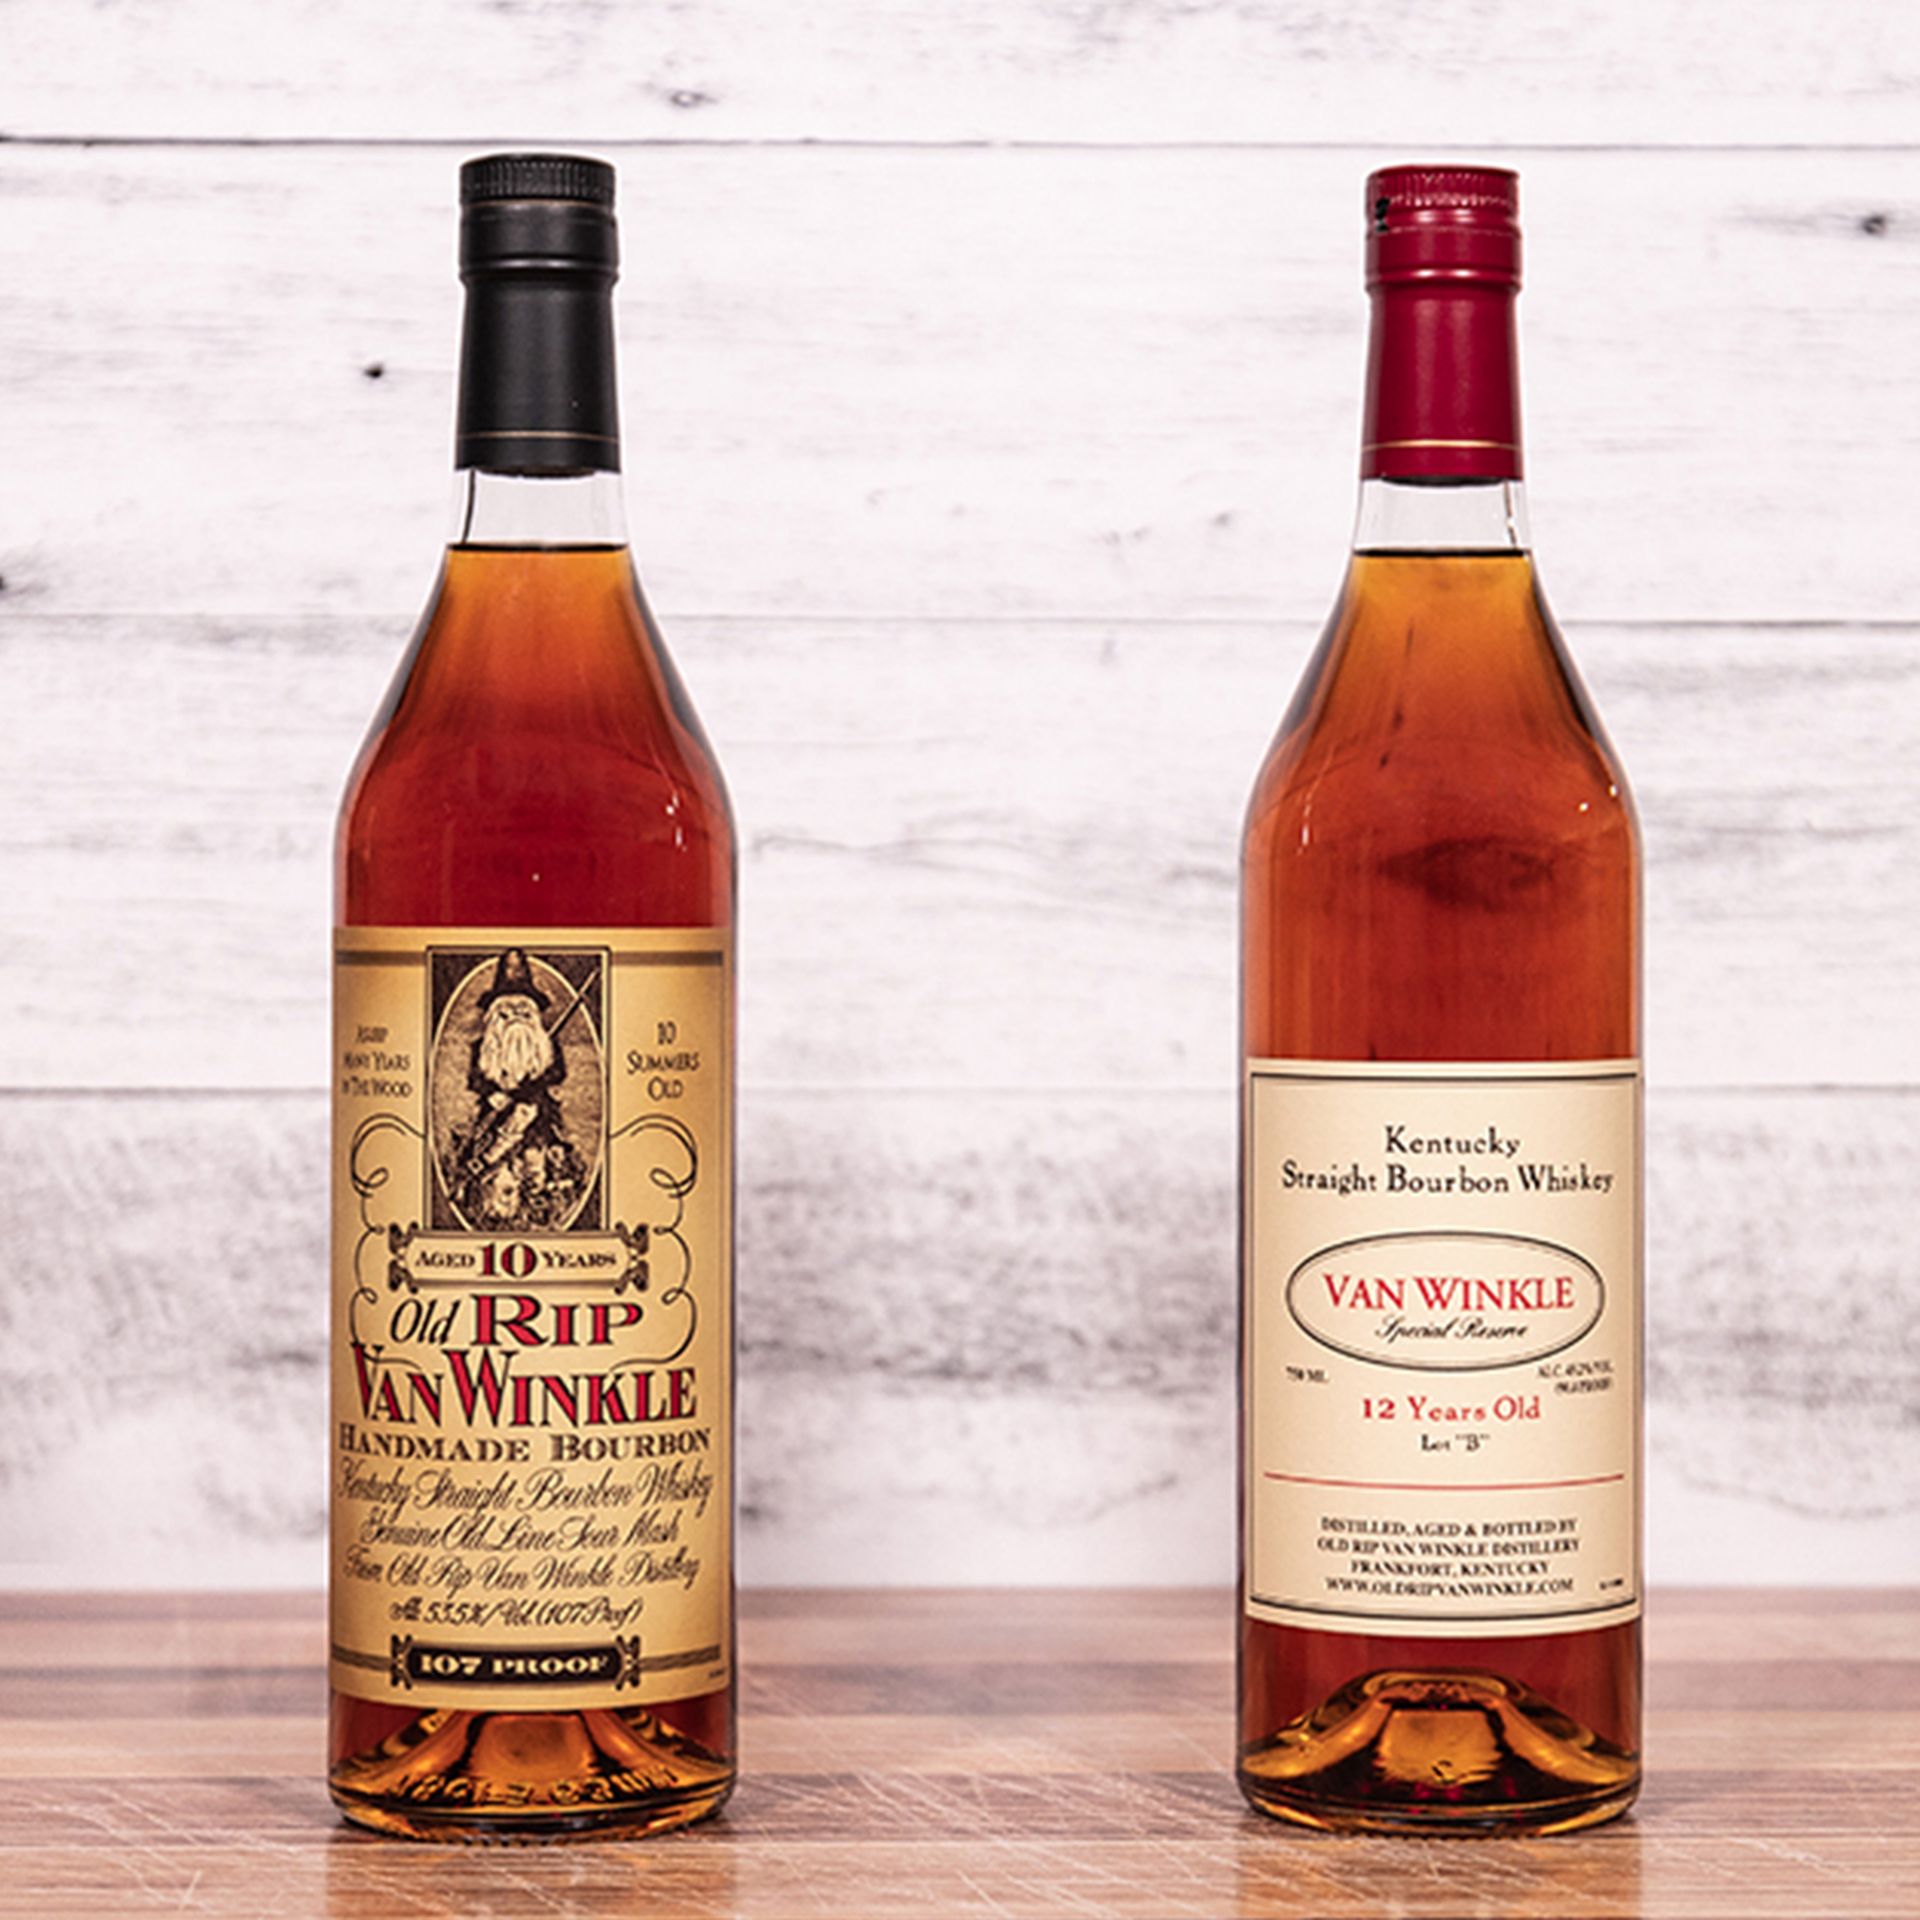 Photo shows two bottles of Pappy Van Winkle bourbon: Old Rip Van Winkle 10 Year on left, Van Winkle Special Reserve Bourbon 12 Year on right 